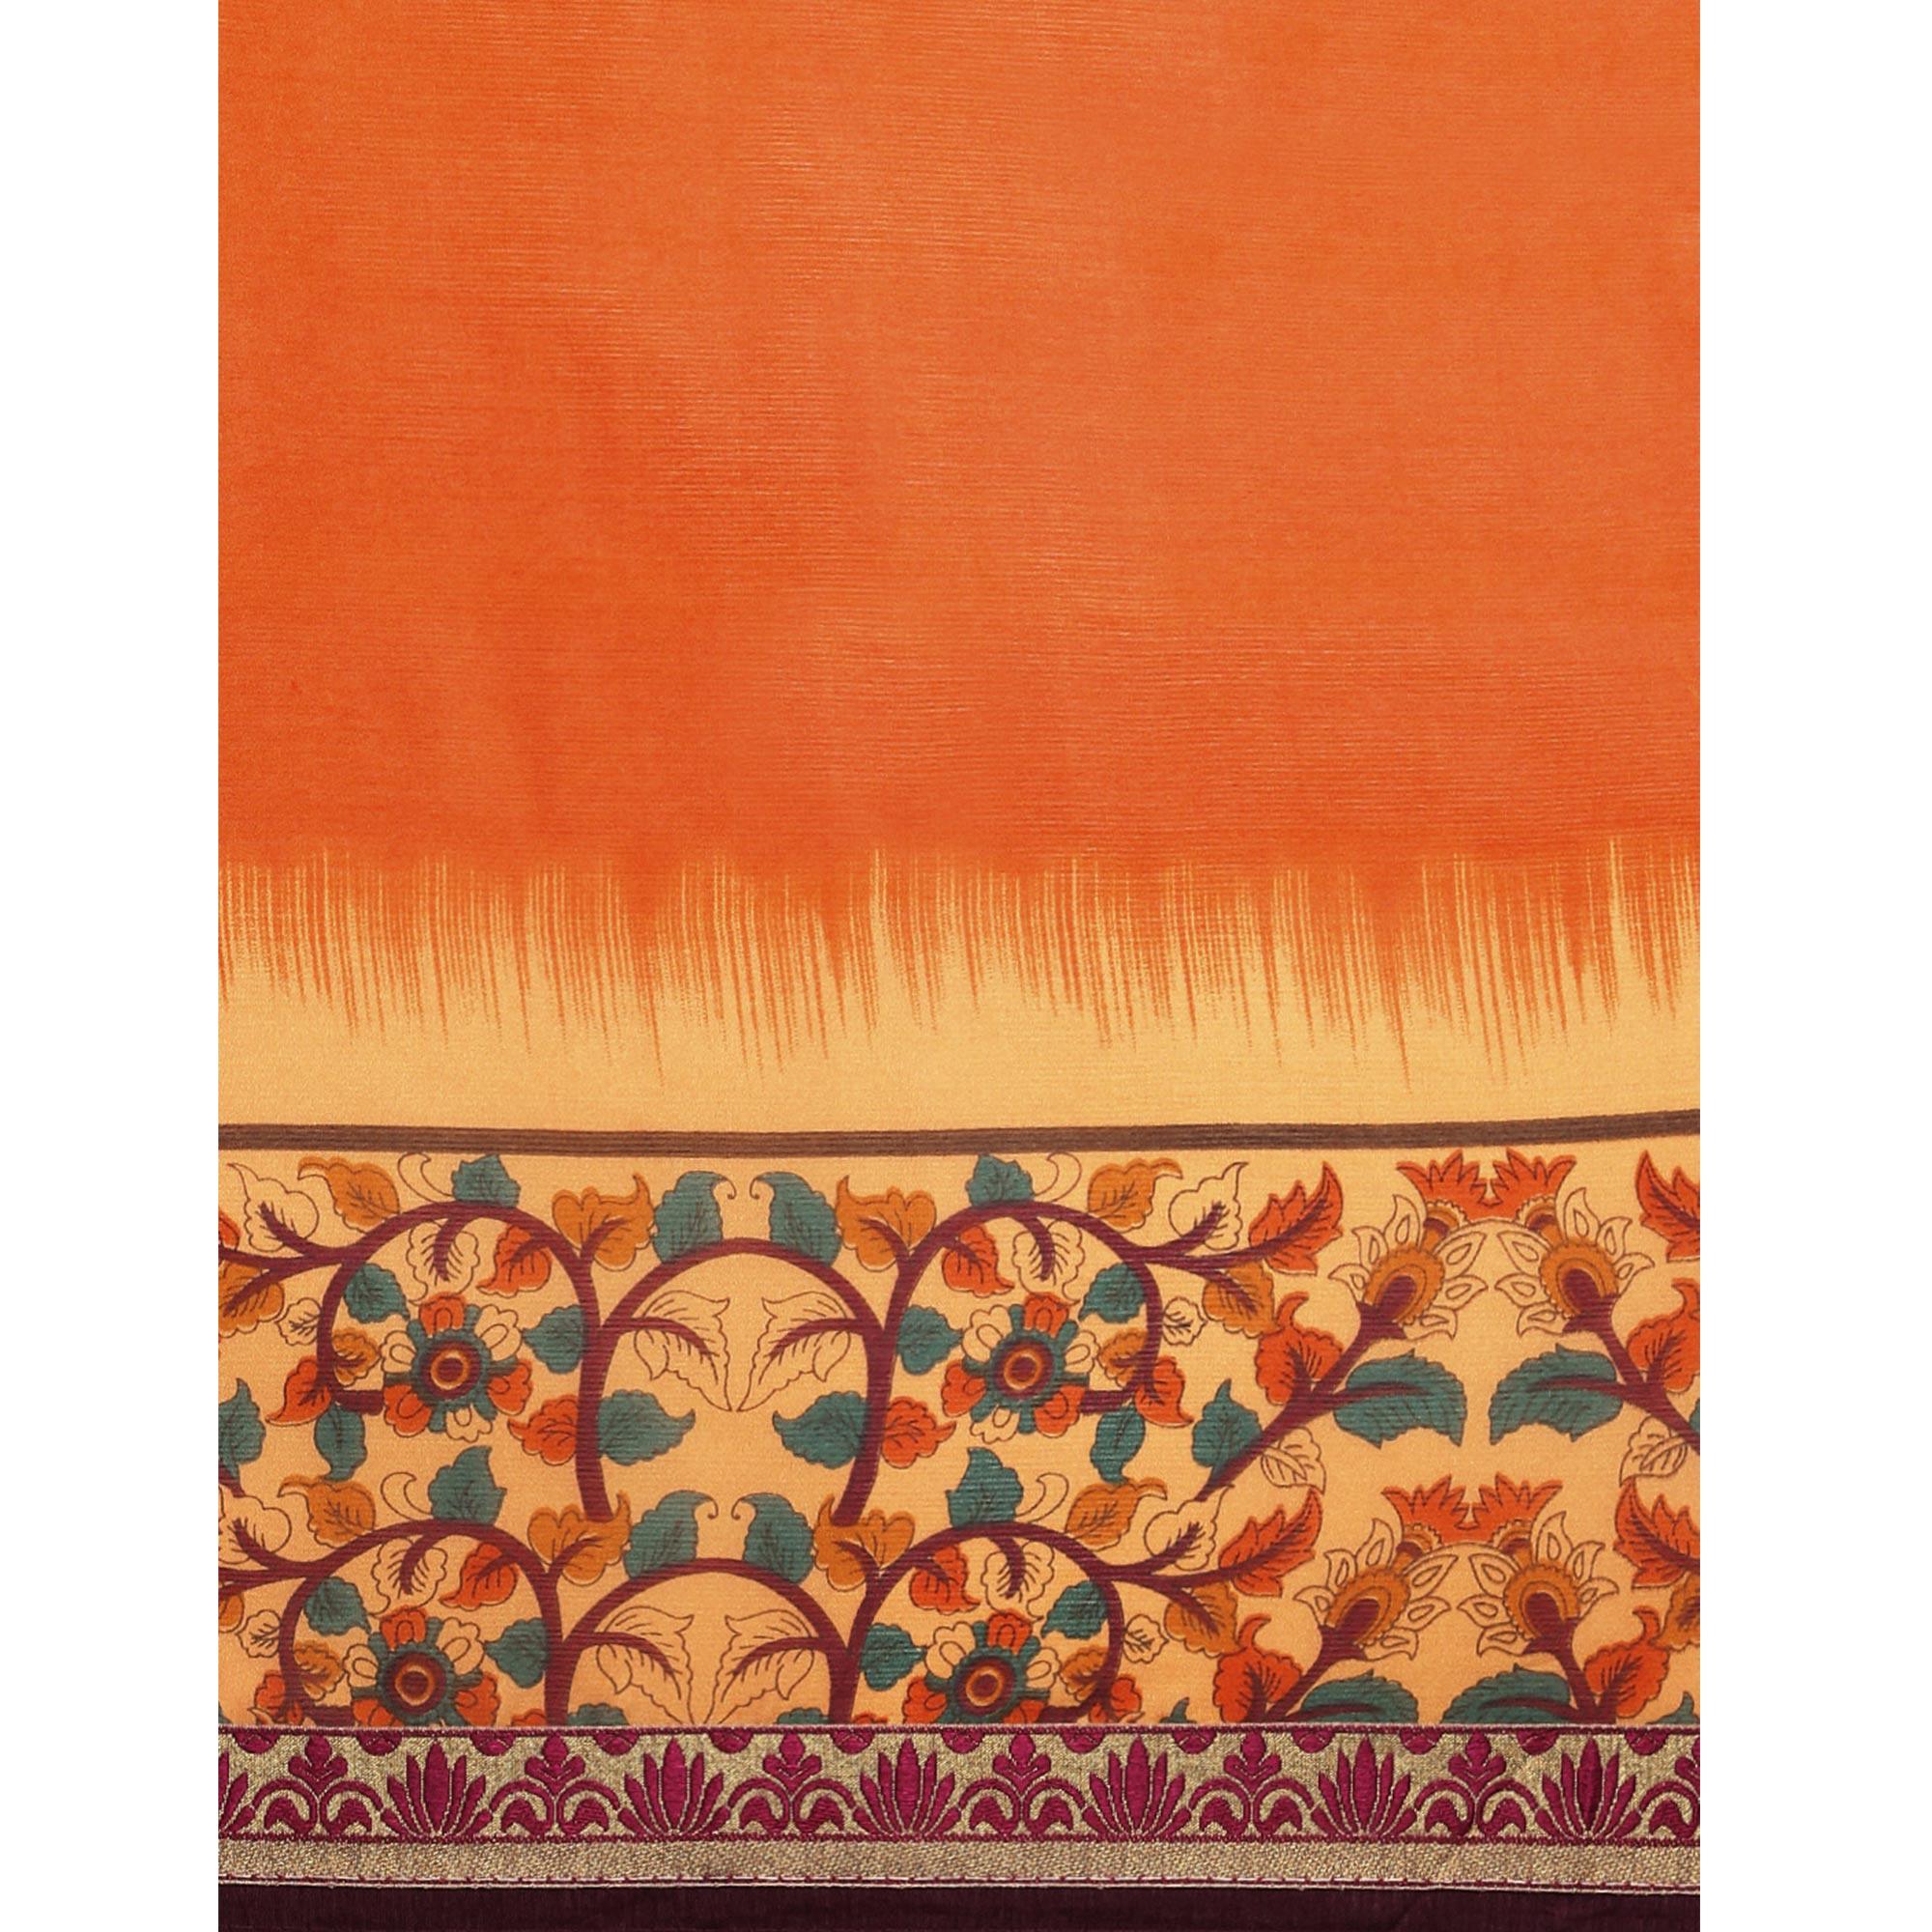 Mesmeric Orange Colored Partywear Printed Rangoli Silk Saree - Peachmode